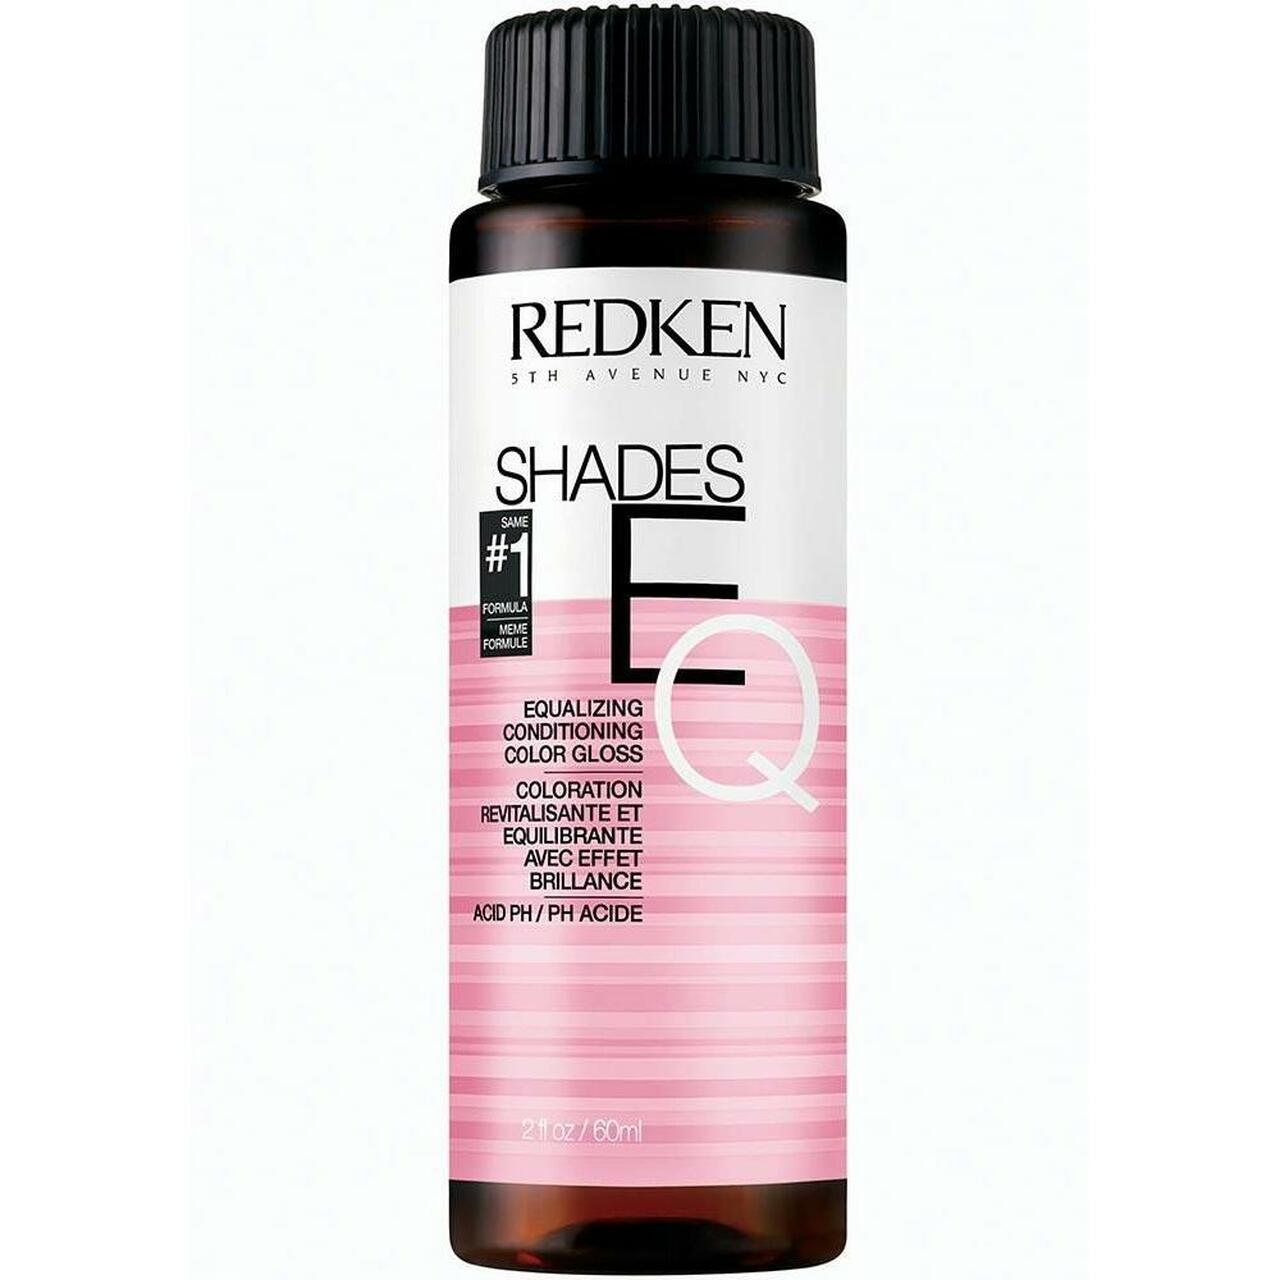 Redken Shades Eq Hair Color Gloss 07G - Saffron For Women, 2 Oz - image 1 of 2